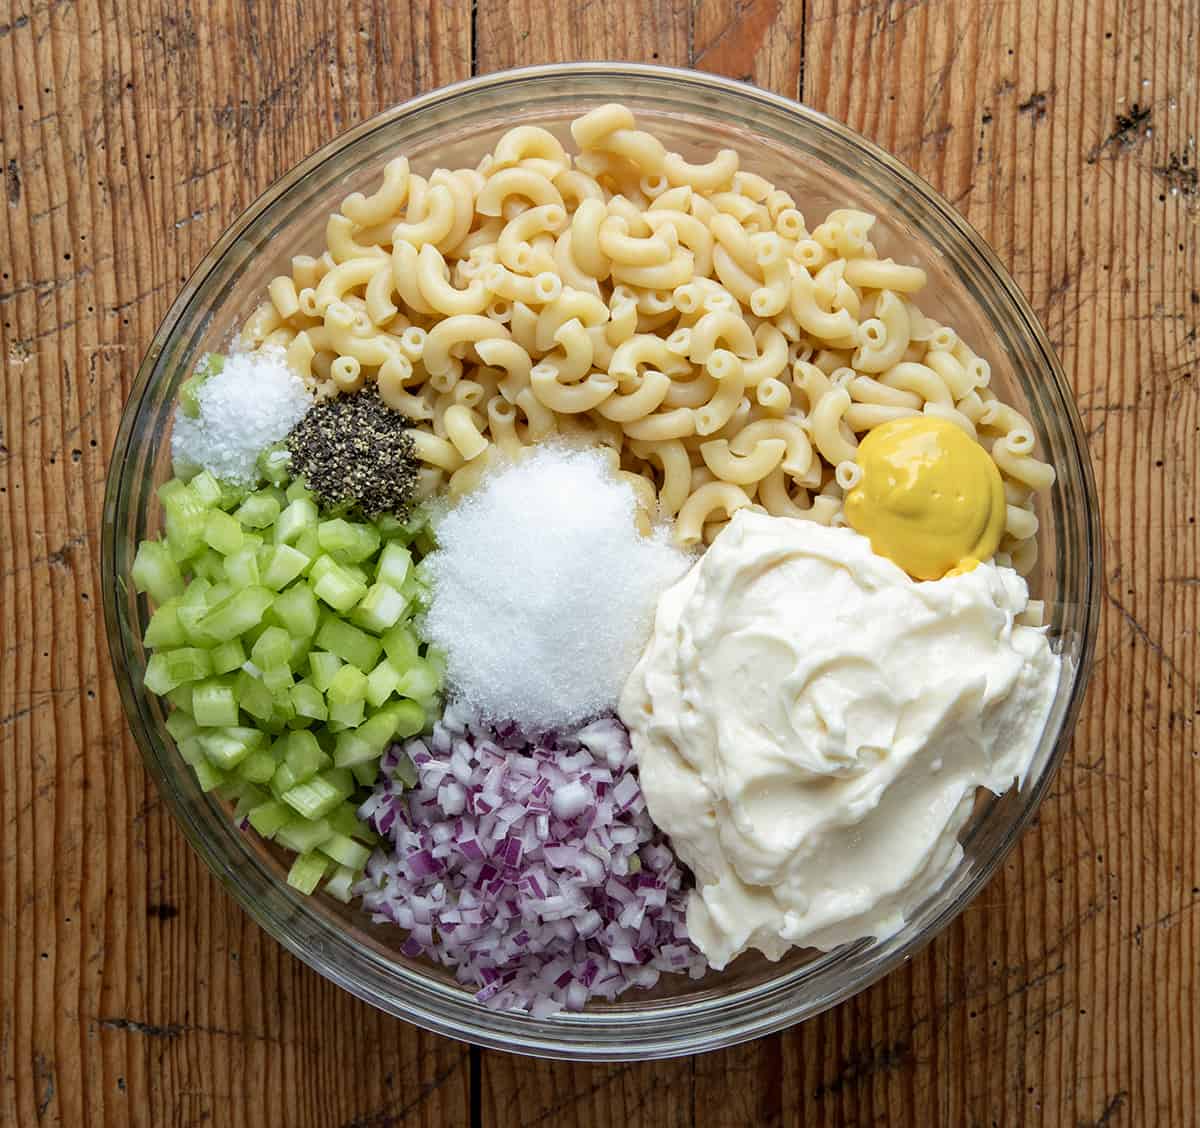 Raw ingredients for making Macaroni Salad in a bowl.